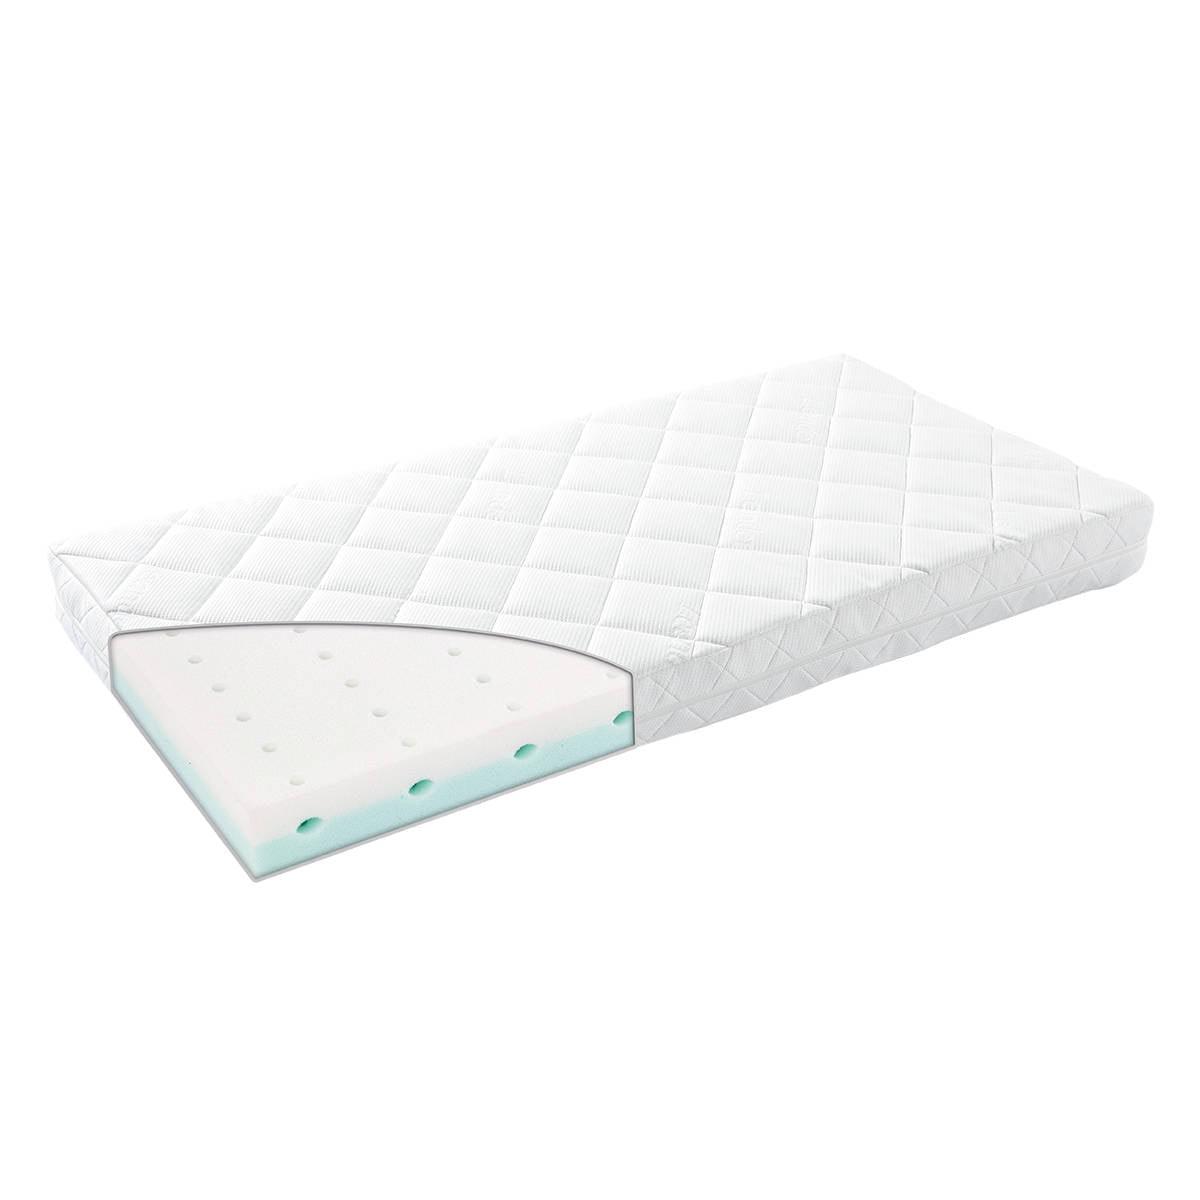 Leander: Comfort mattress for Luna and Linea cribs